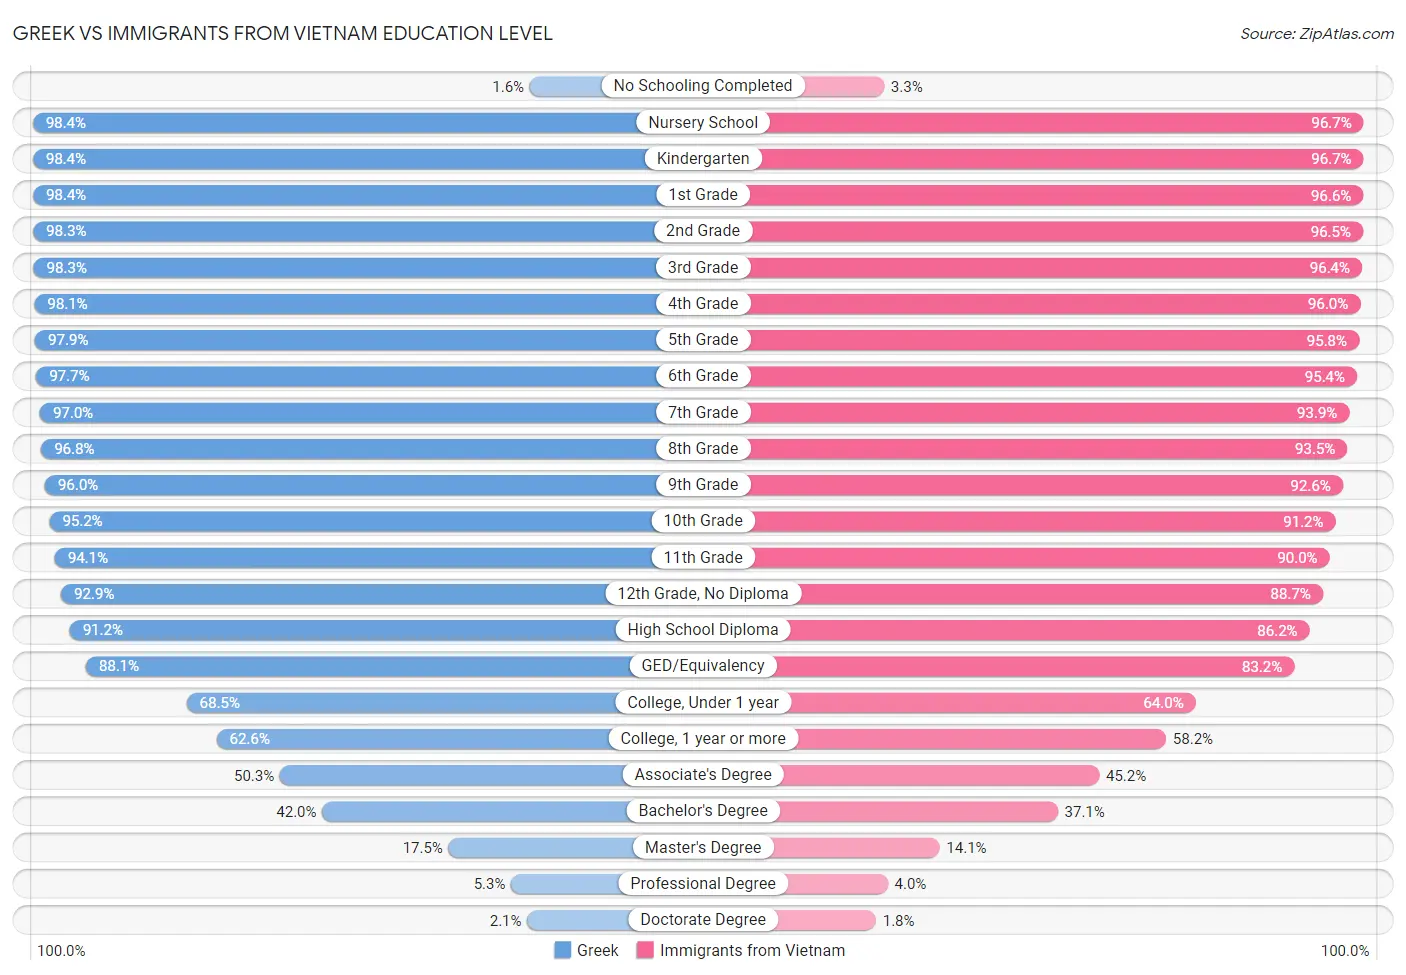 Greek vs Immigrants from Vietnam Education Level